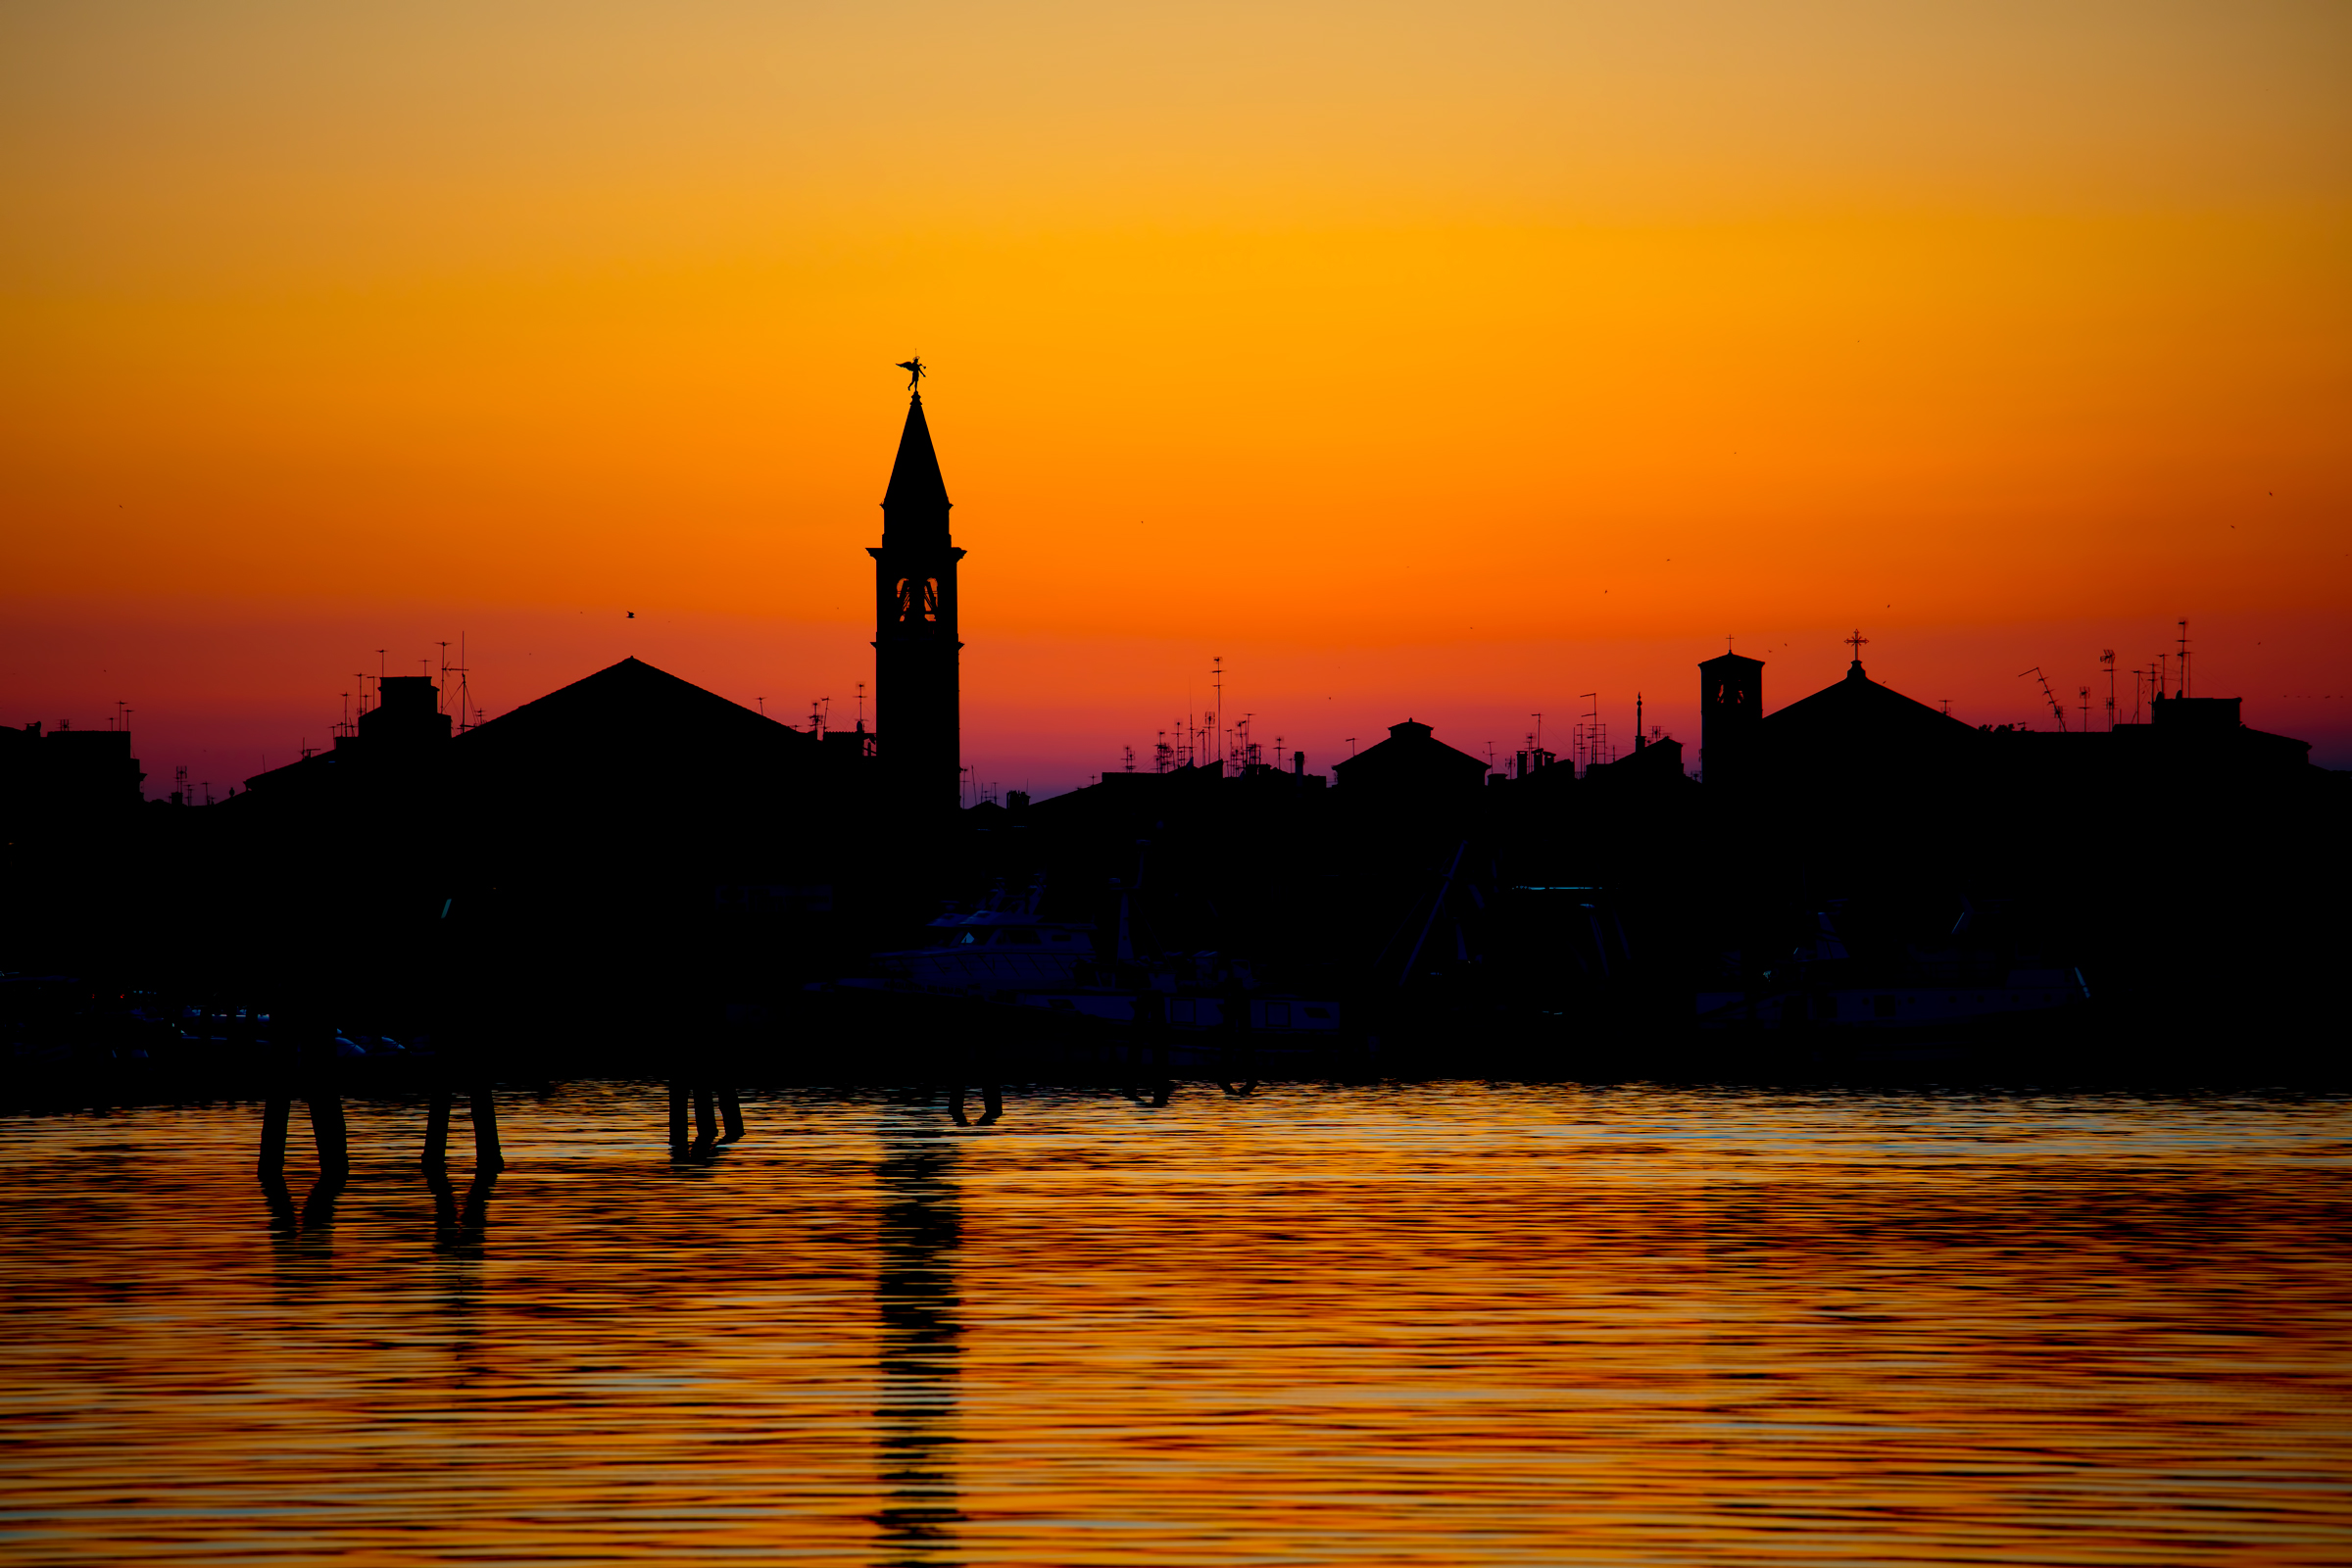 Profile of Chioggia at sunset...